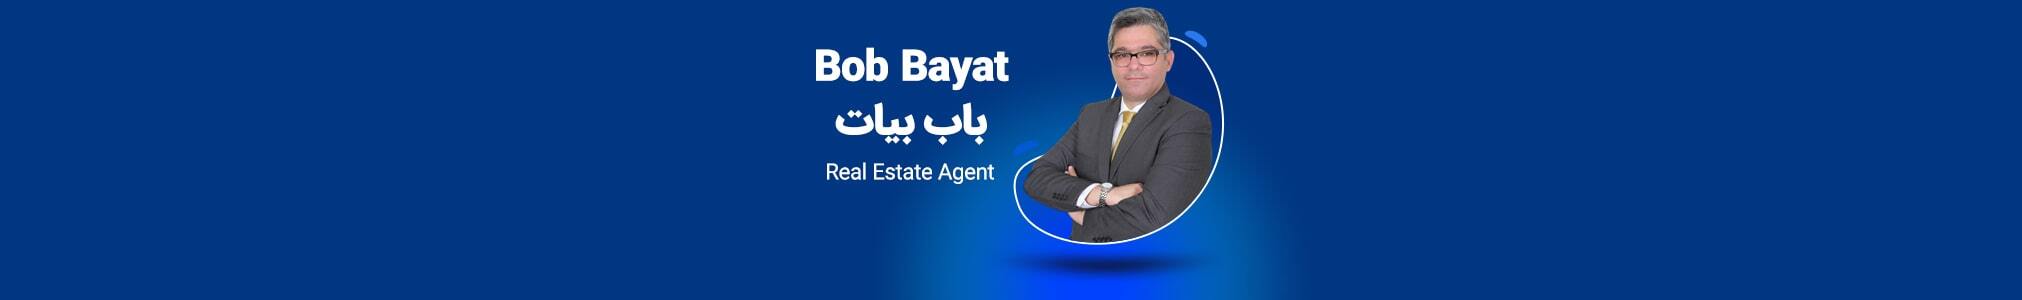 Bob Bayat